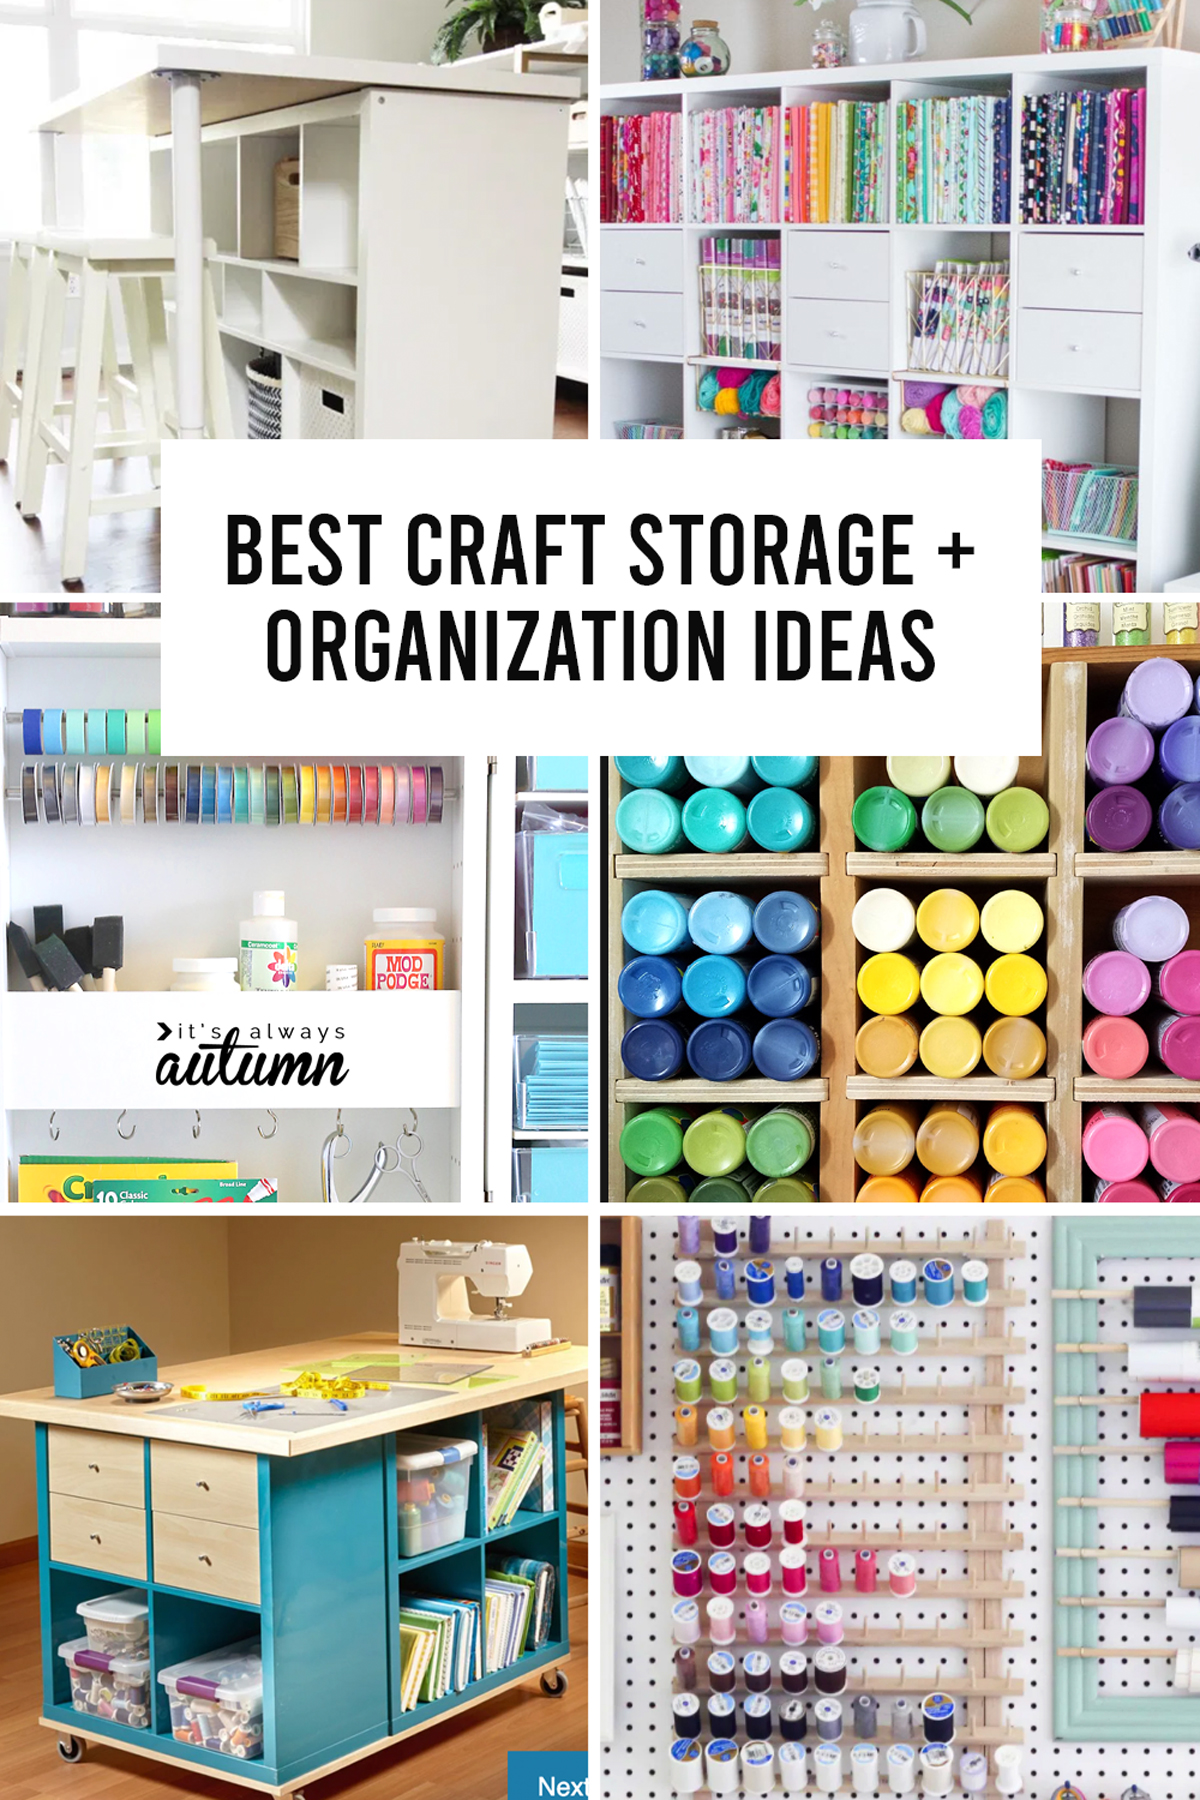 Collage photo showing best craft storage and organization ideas